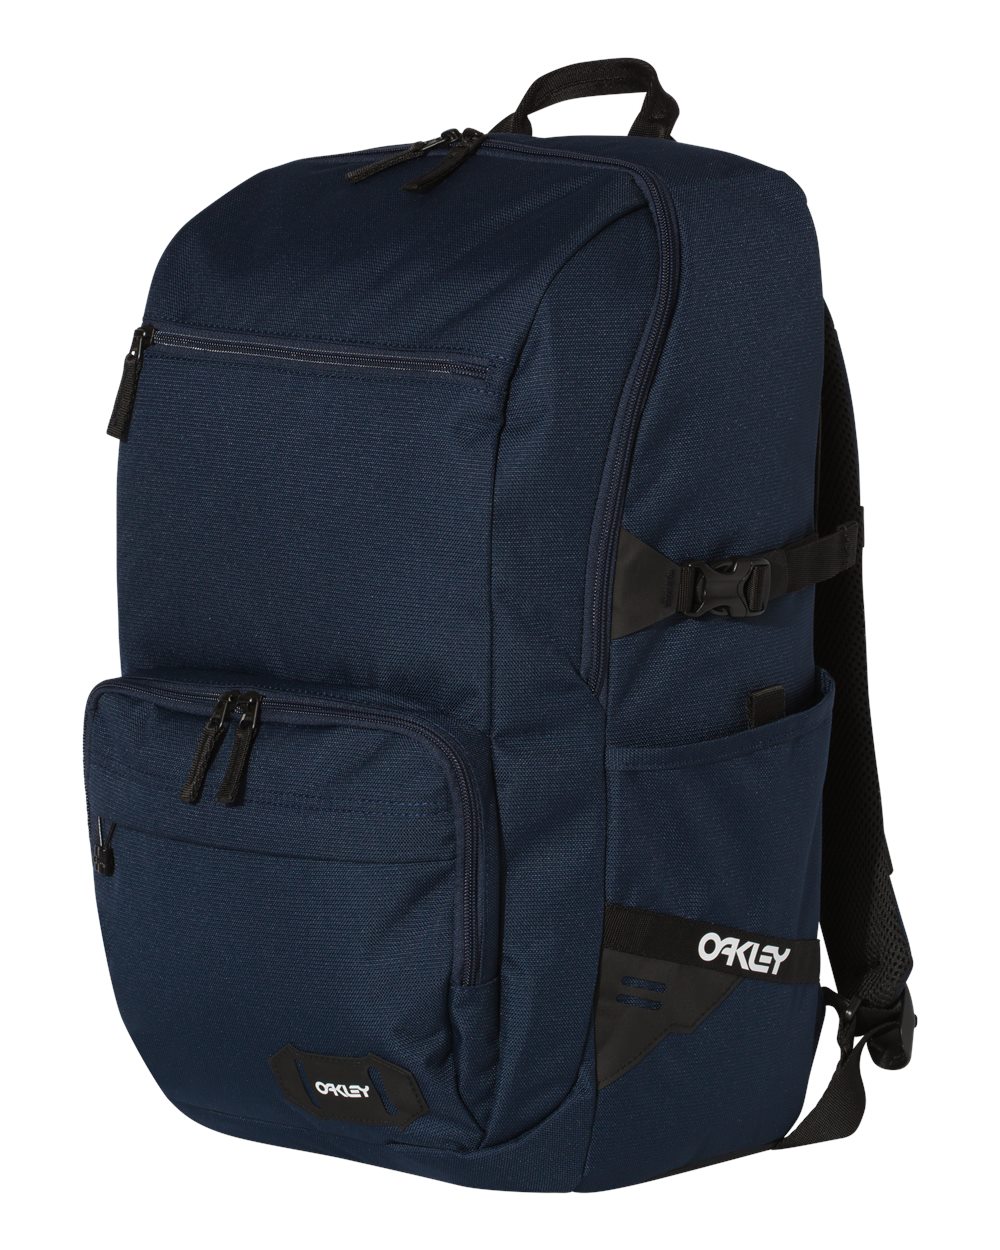 Oakley 921422ODM - 28L Street Pocket Backpack $60.43 - Bags